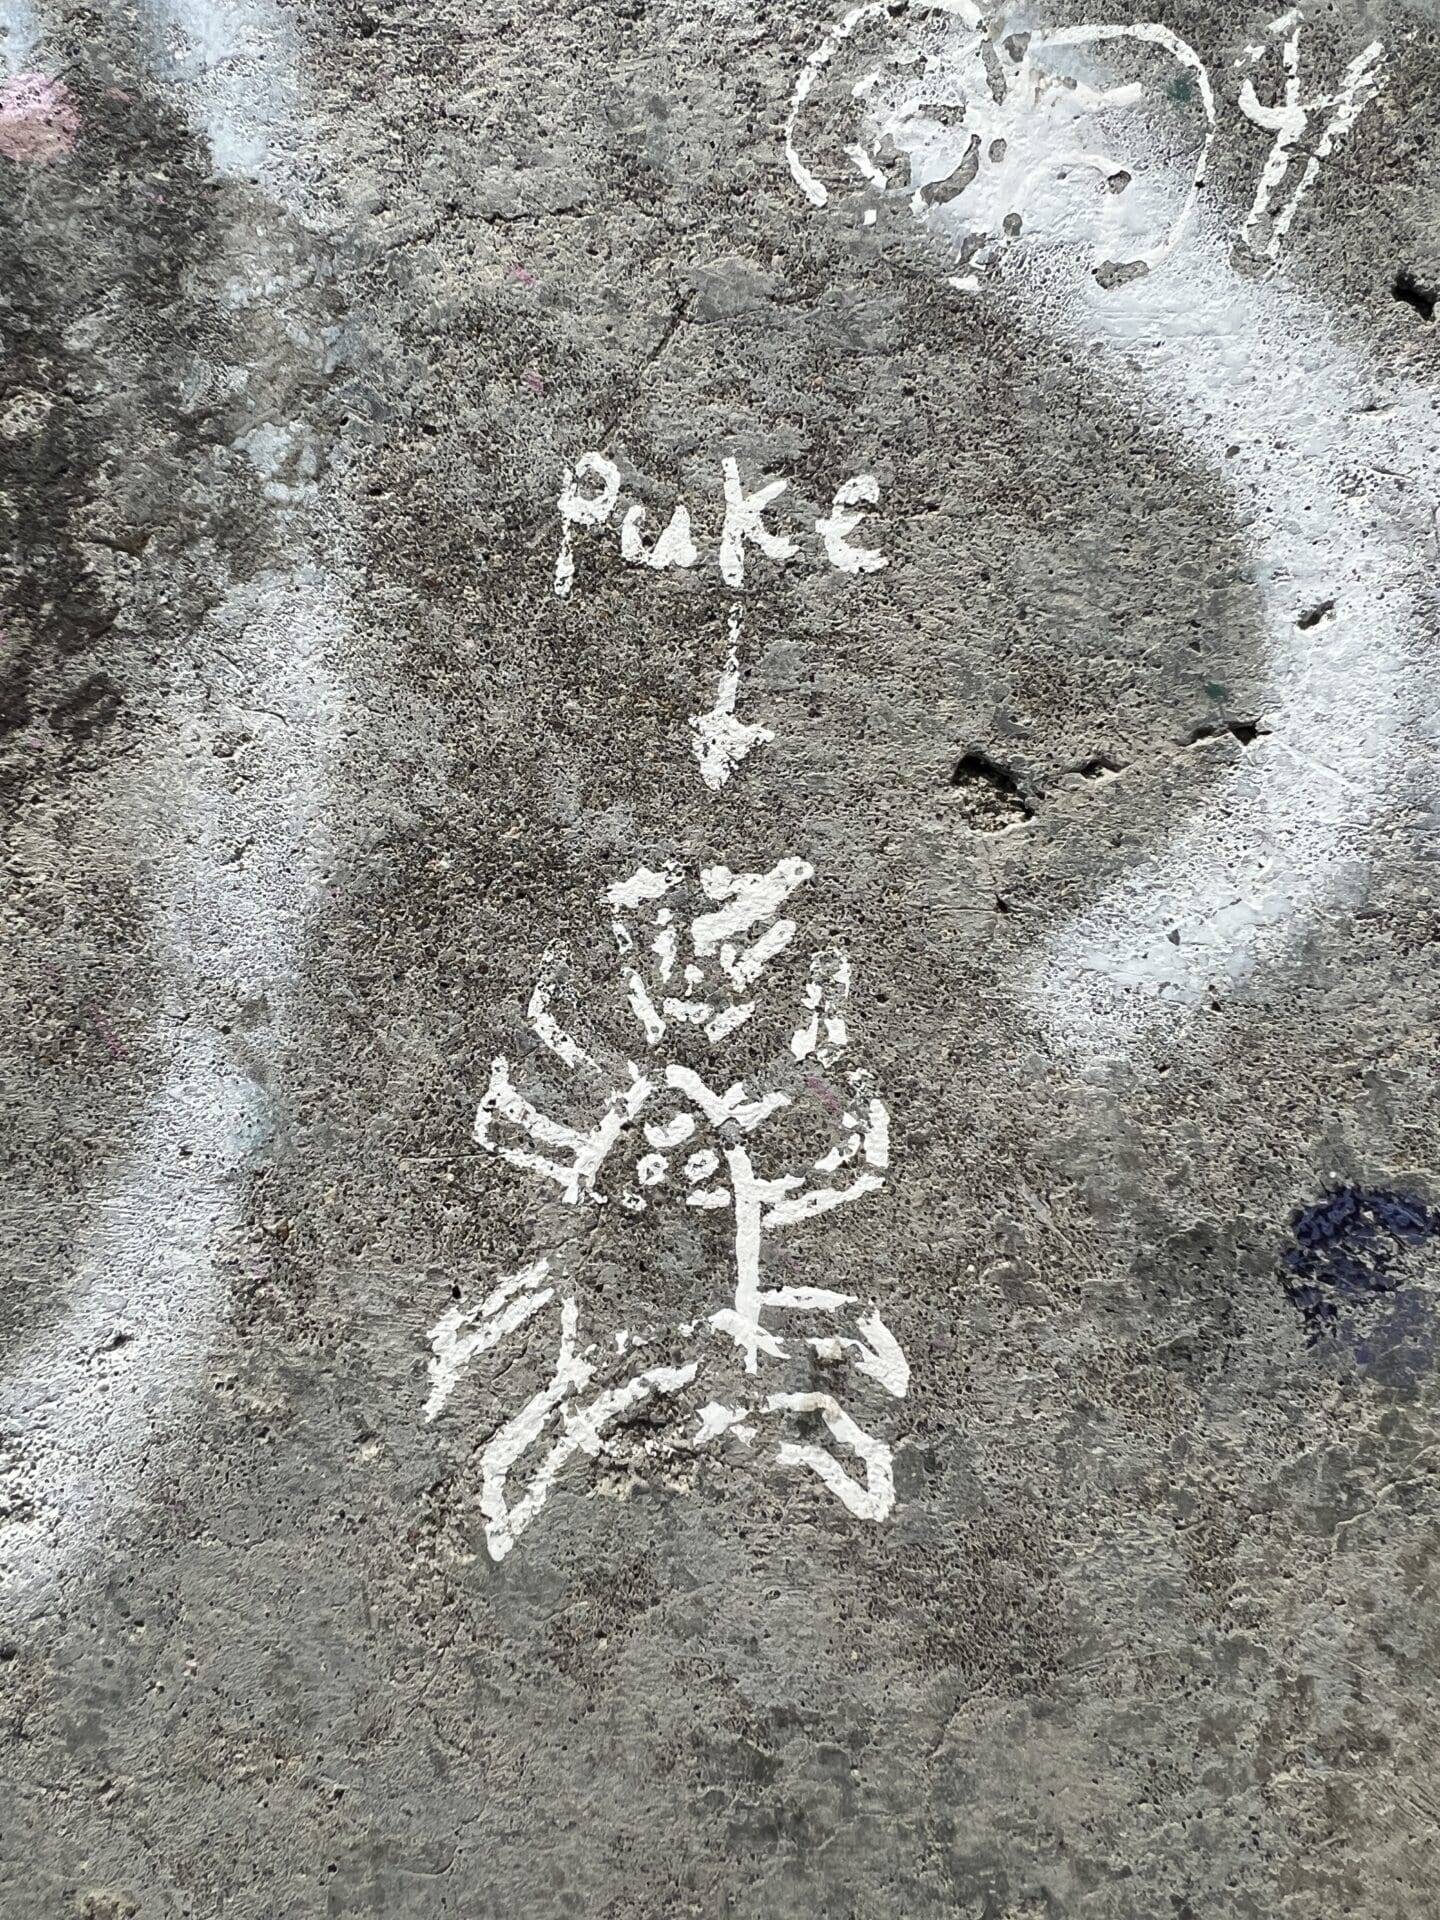 The Sketch of Puke